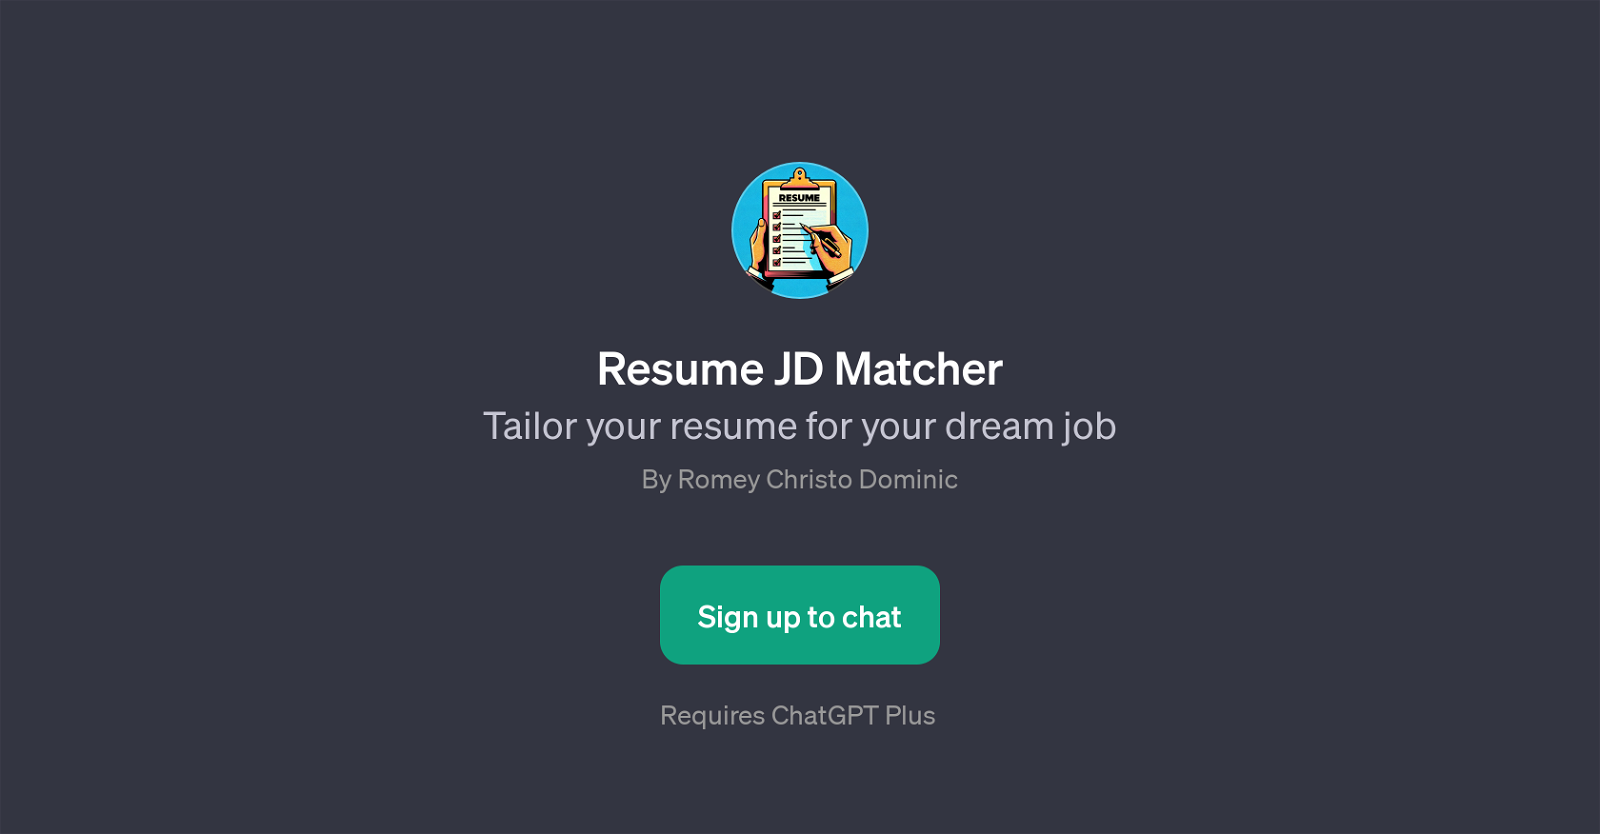 Resume JD Matcher website